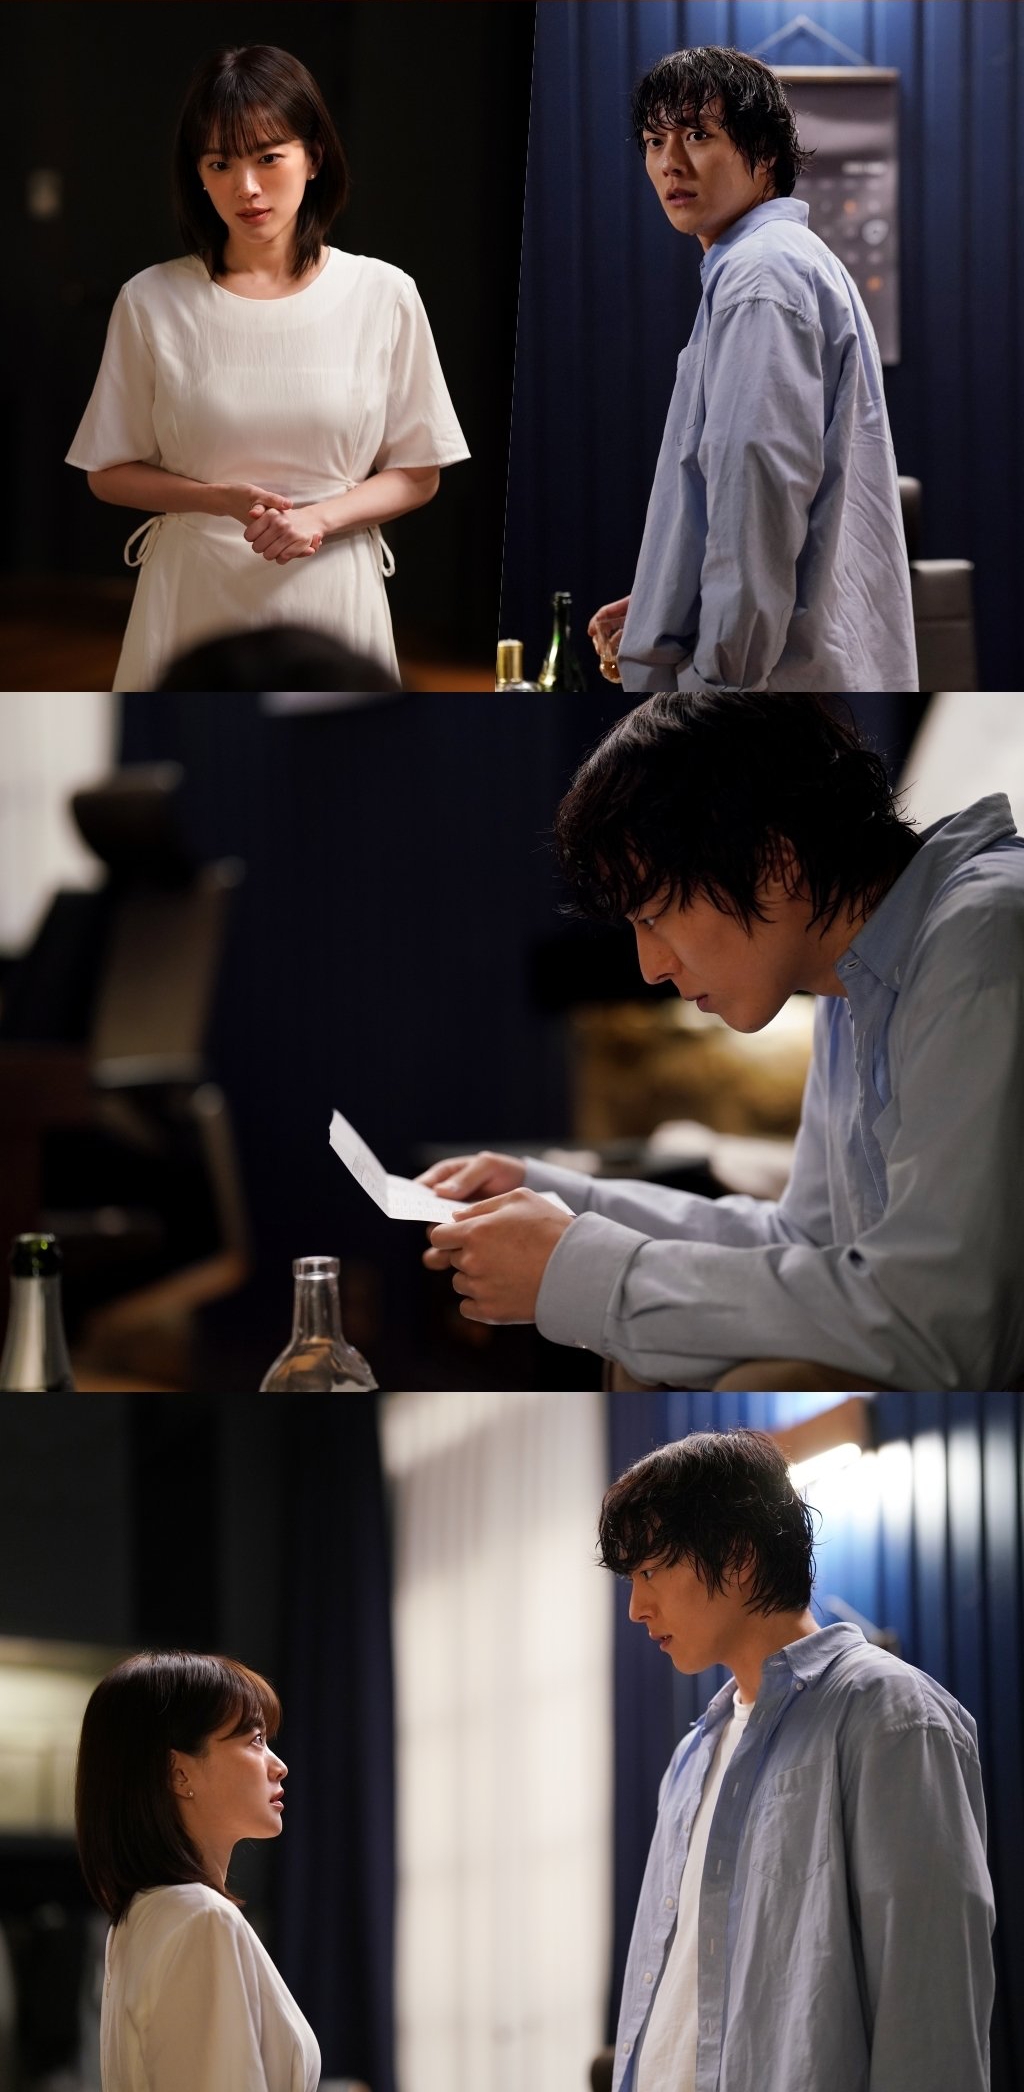 Chun Woo Hee Plays A Hidden Card To Manipulate Jang Ki Yong Into Marrying Her In 